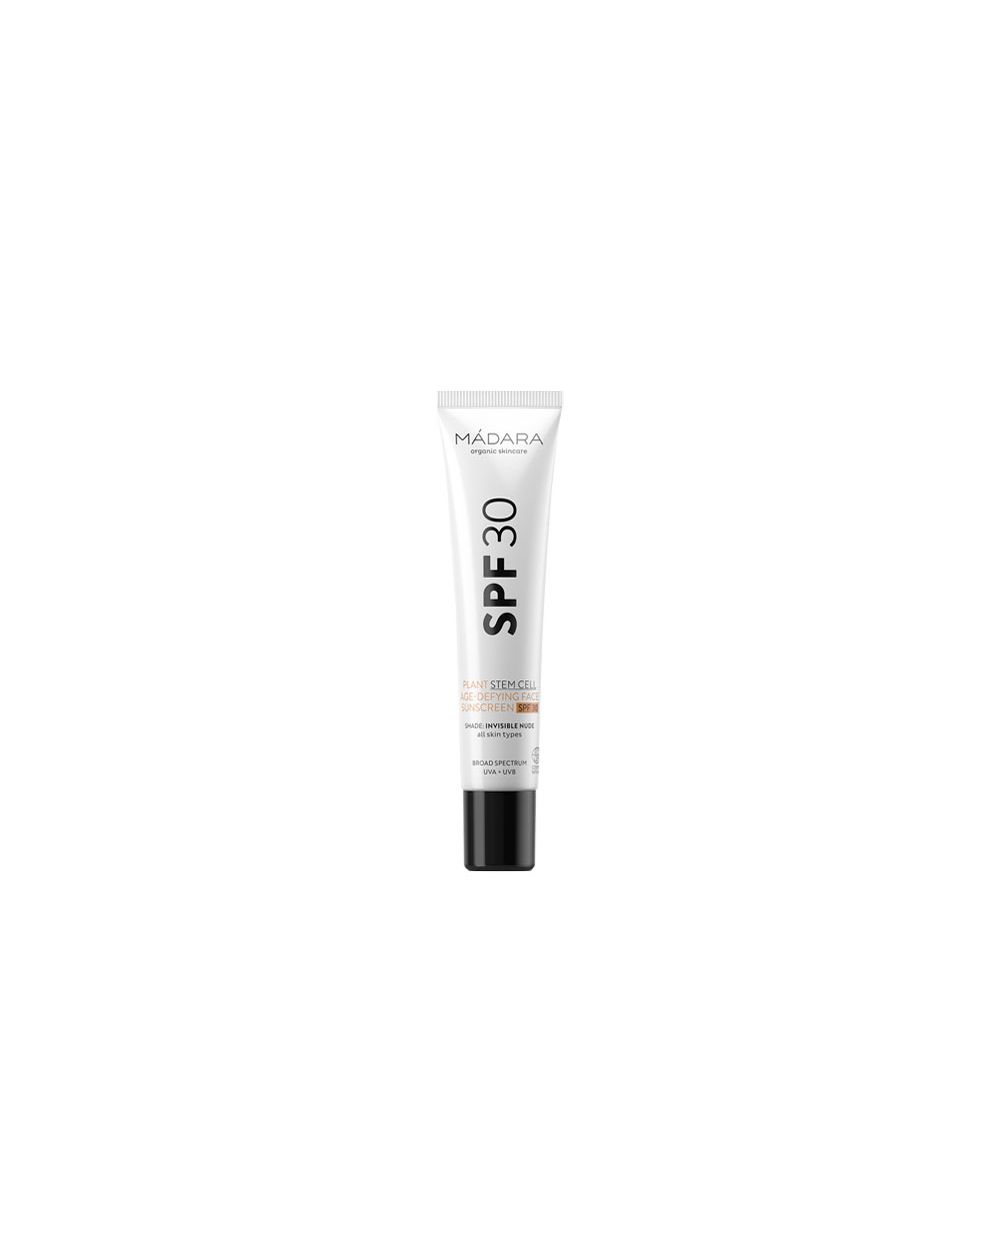 MÁDARA Organic Skincare Plant Stem Cell Age-Defying Face Sunscreen SPF 30,  40 ml - Ecco Verde